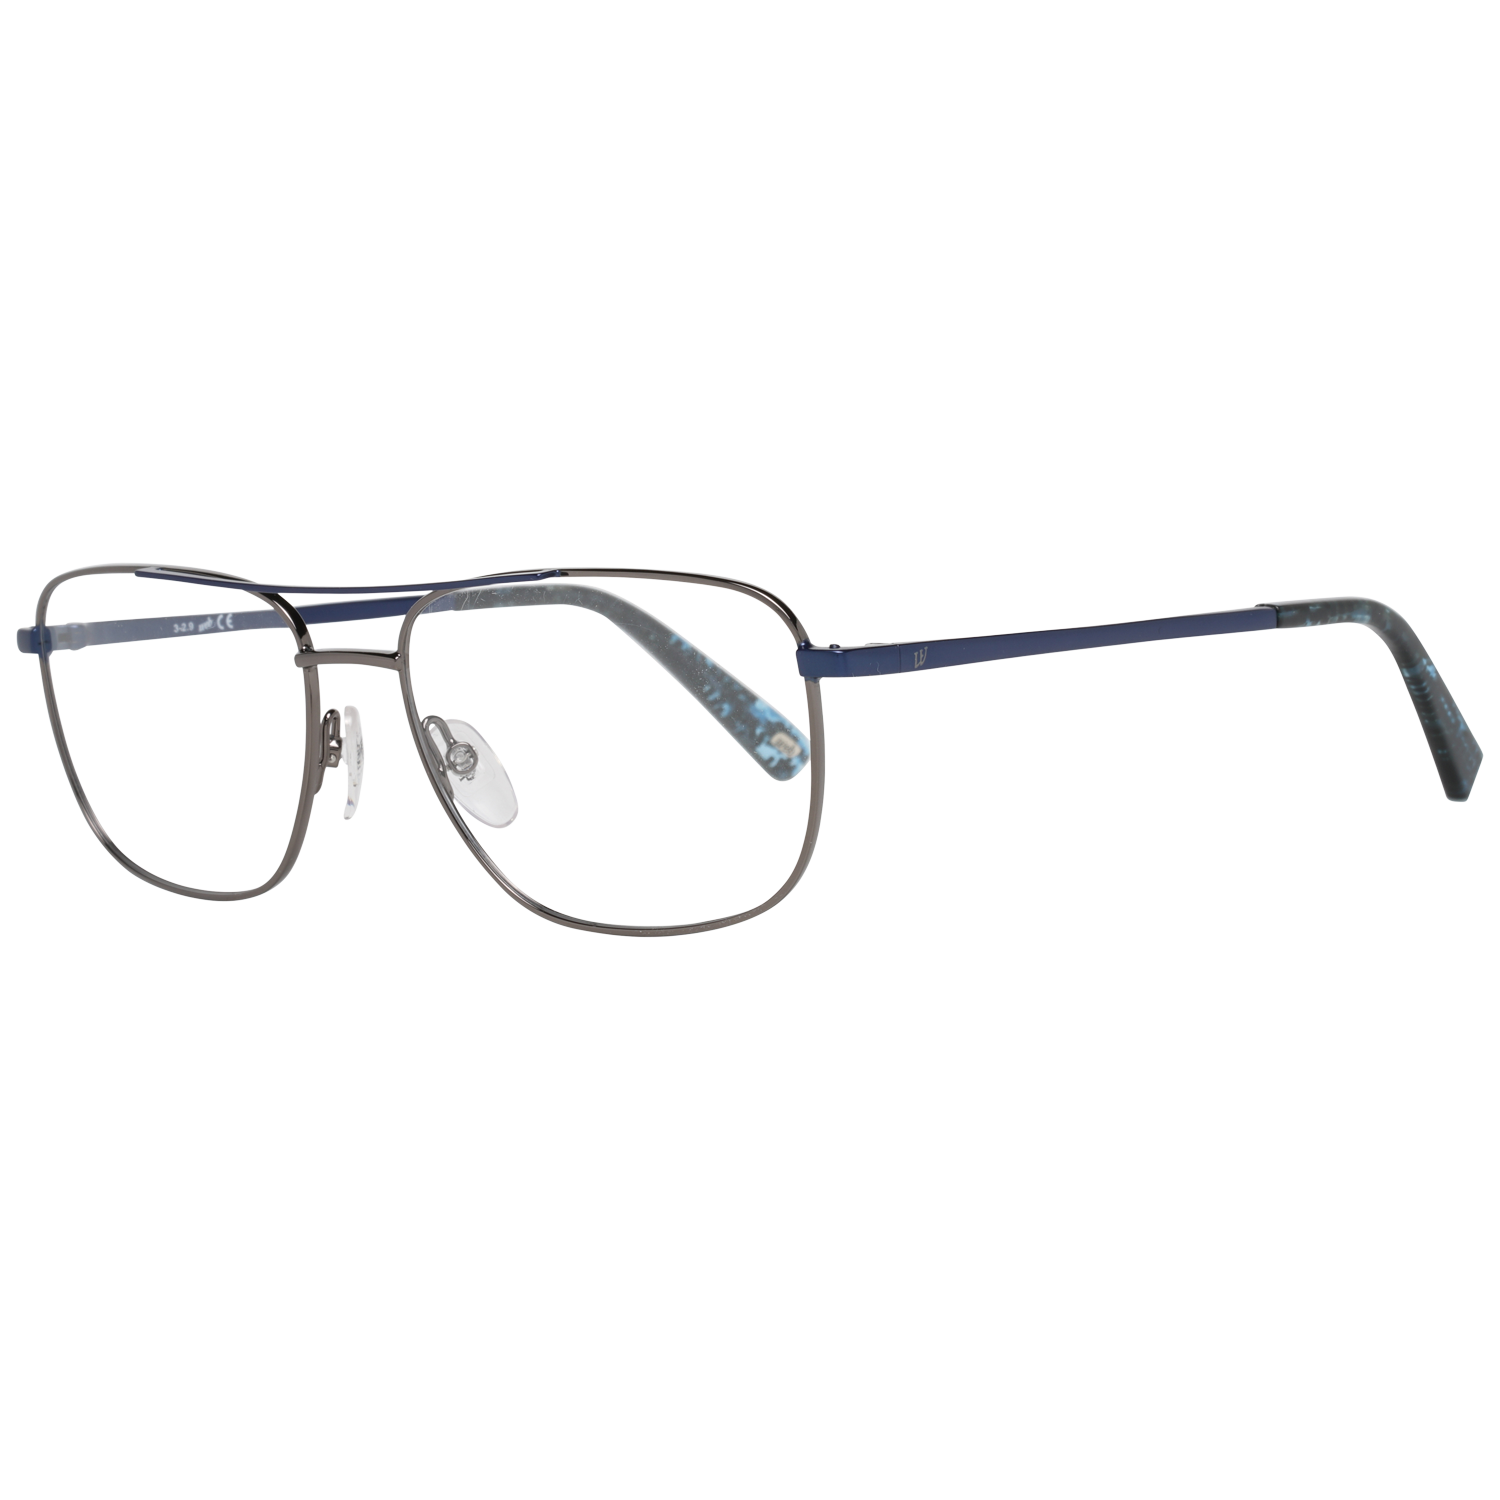 Web Frames Web Prescription Glasses Optical Frame WE5318 008 55 Eyeglasses Eyewear UK USA Australia 